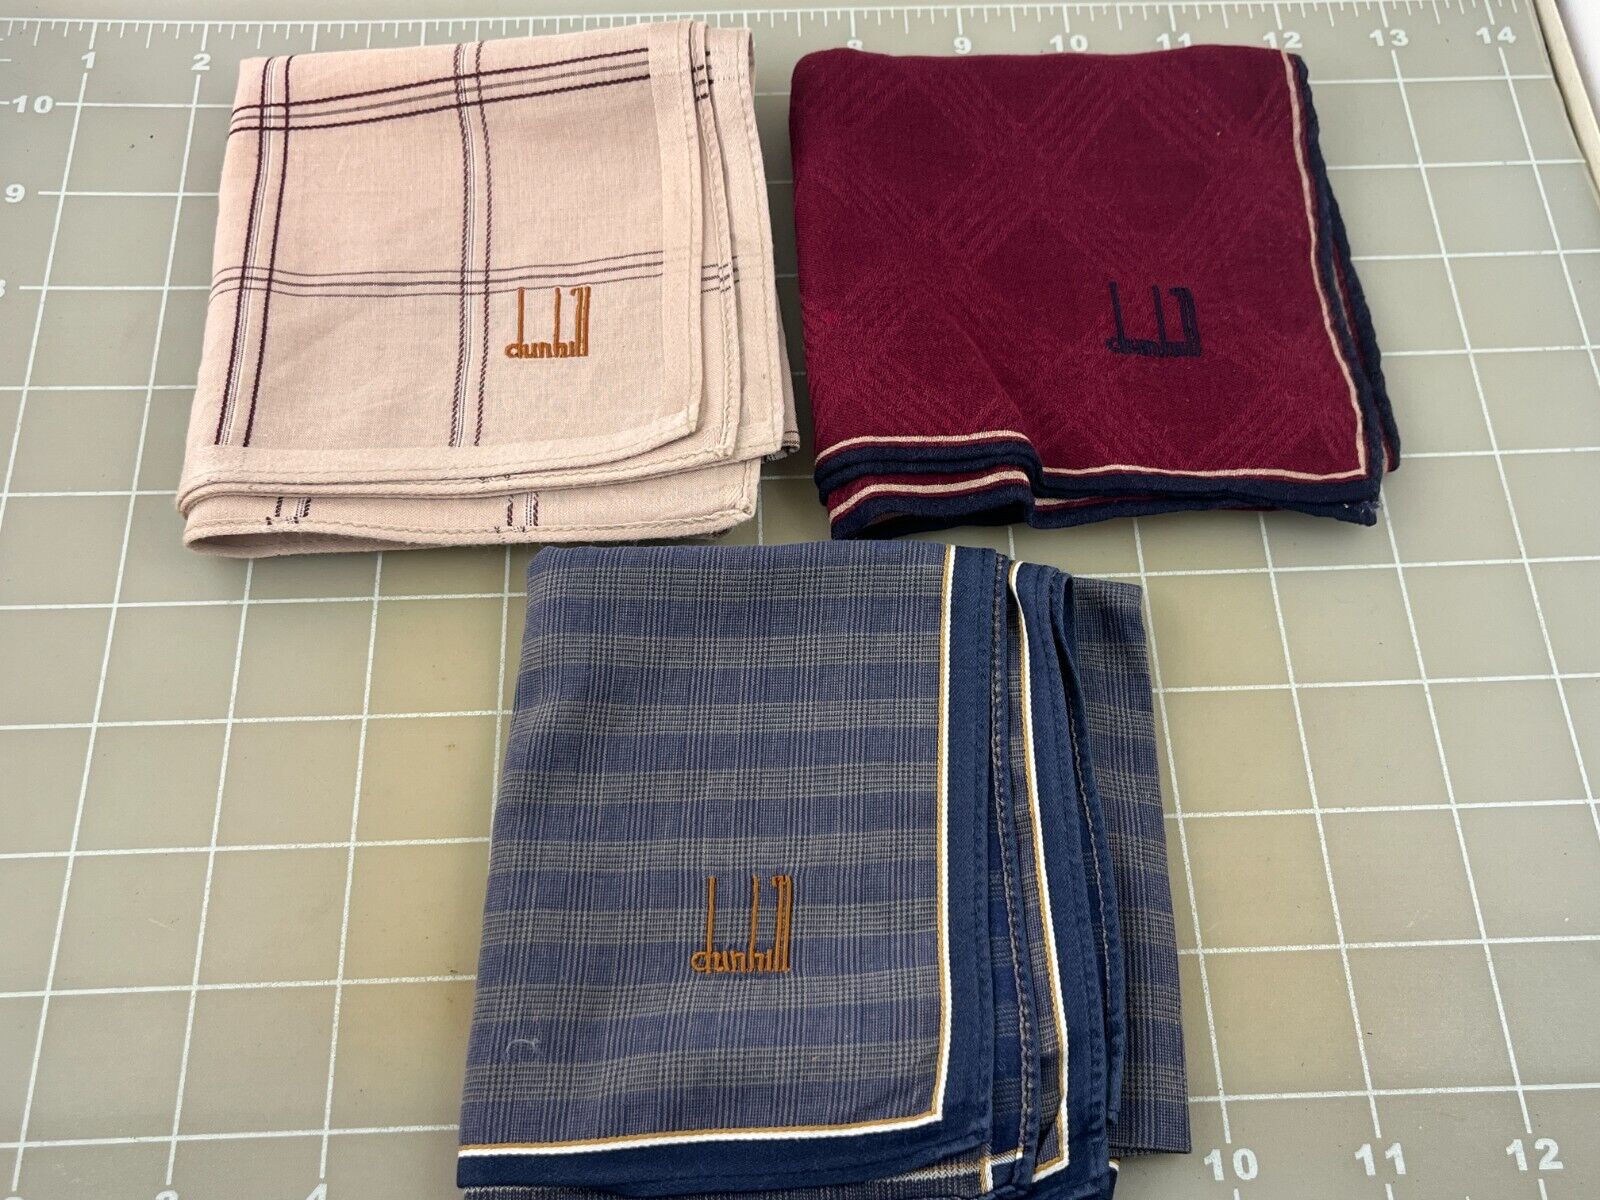 Judd's Lot of 3 NEW Dunhill Handkerchiefs